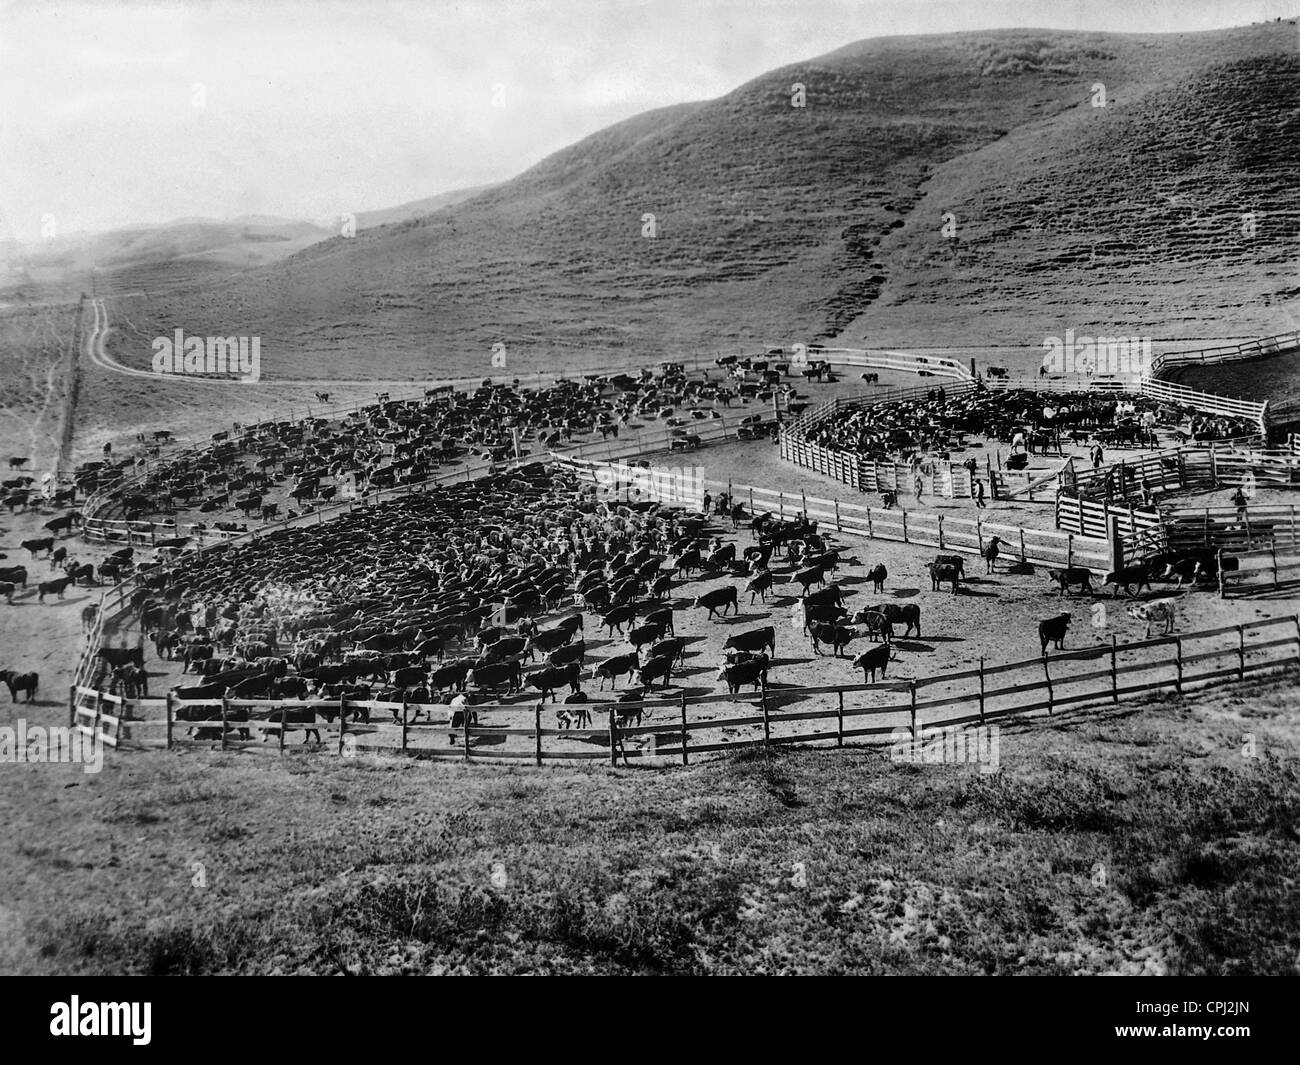 Cattle herd in Wyoming, 1929 Stock Photo